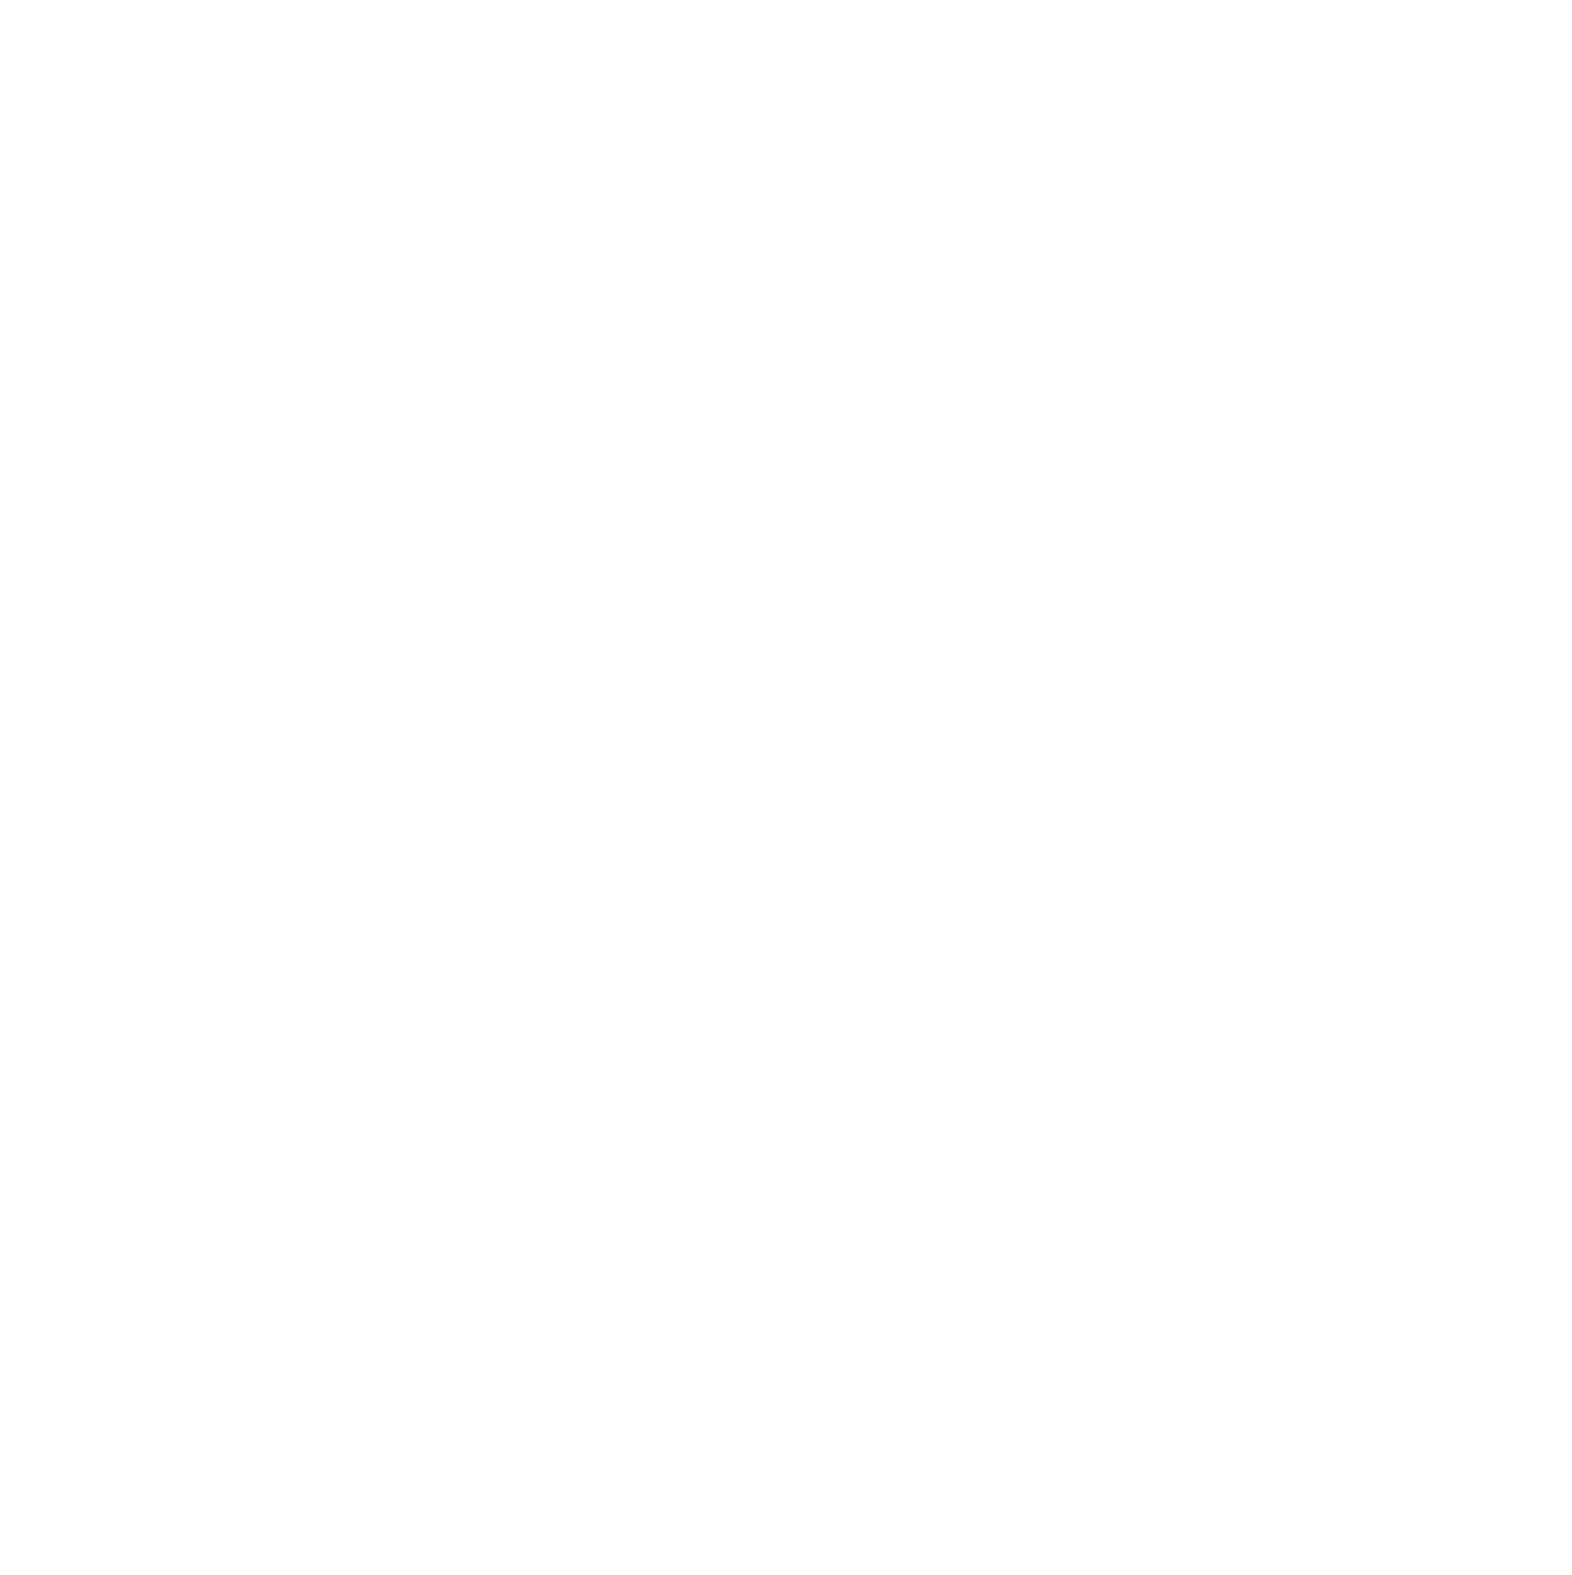 Quotient logo for dark backgrounds (transparent PNG)